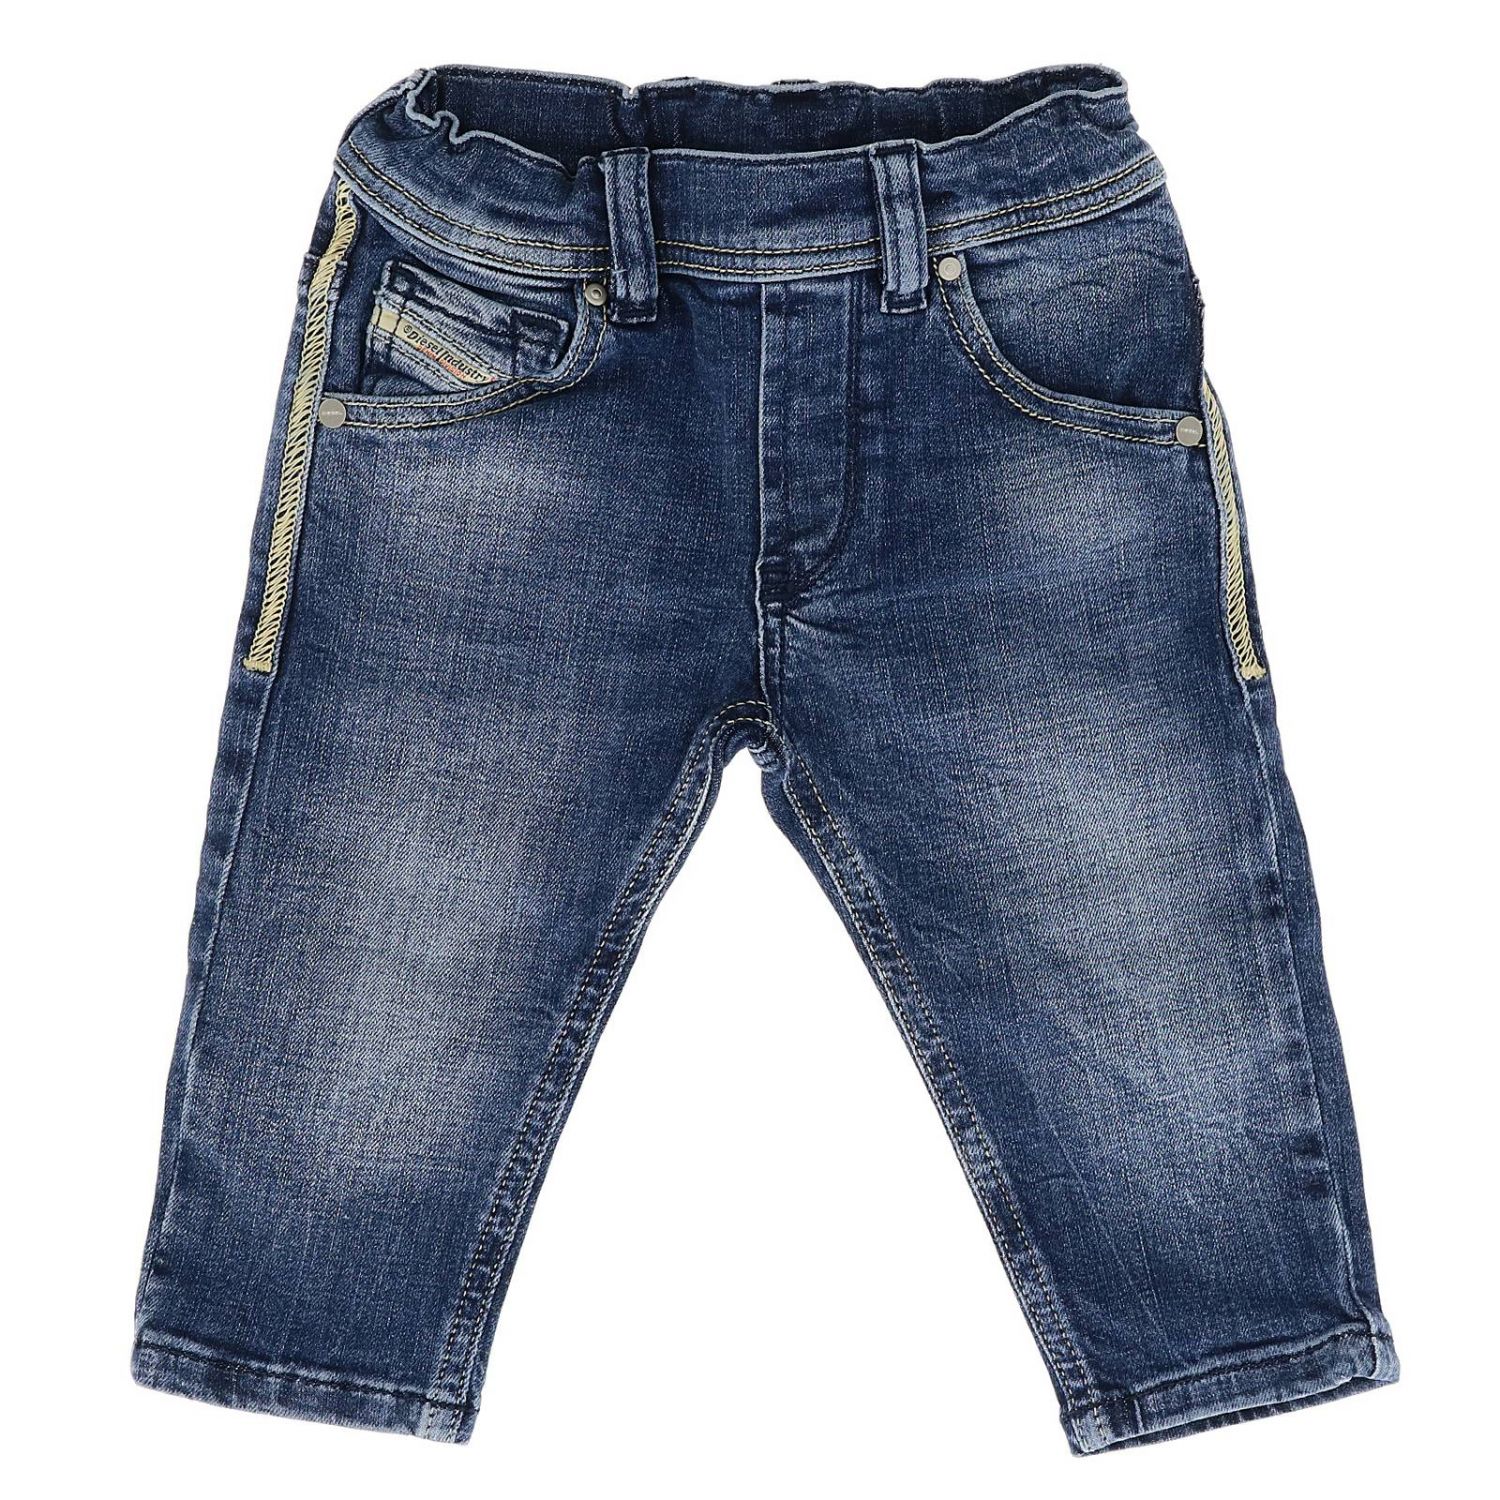 Diesel Outlet: jeans for baby - Denim | Diesel jeans 00K1UD KXA97 ...